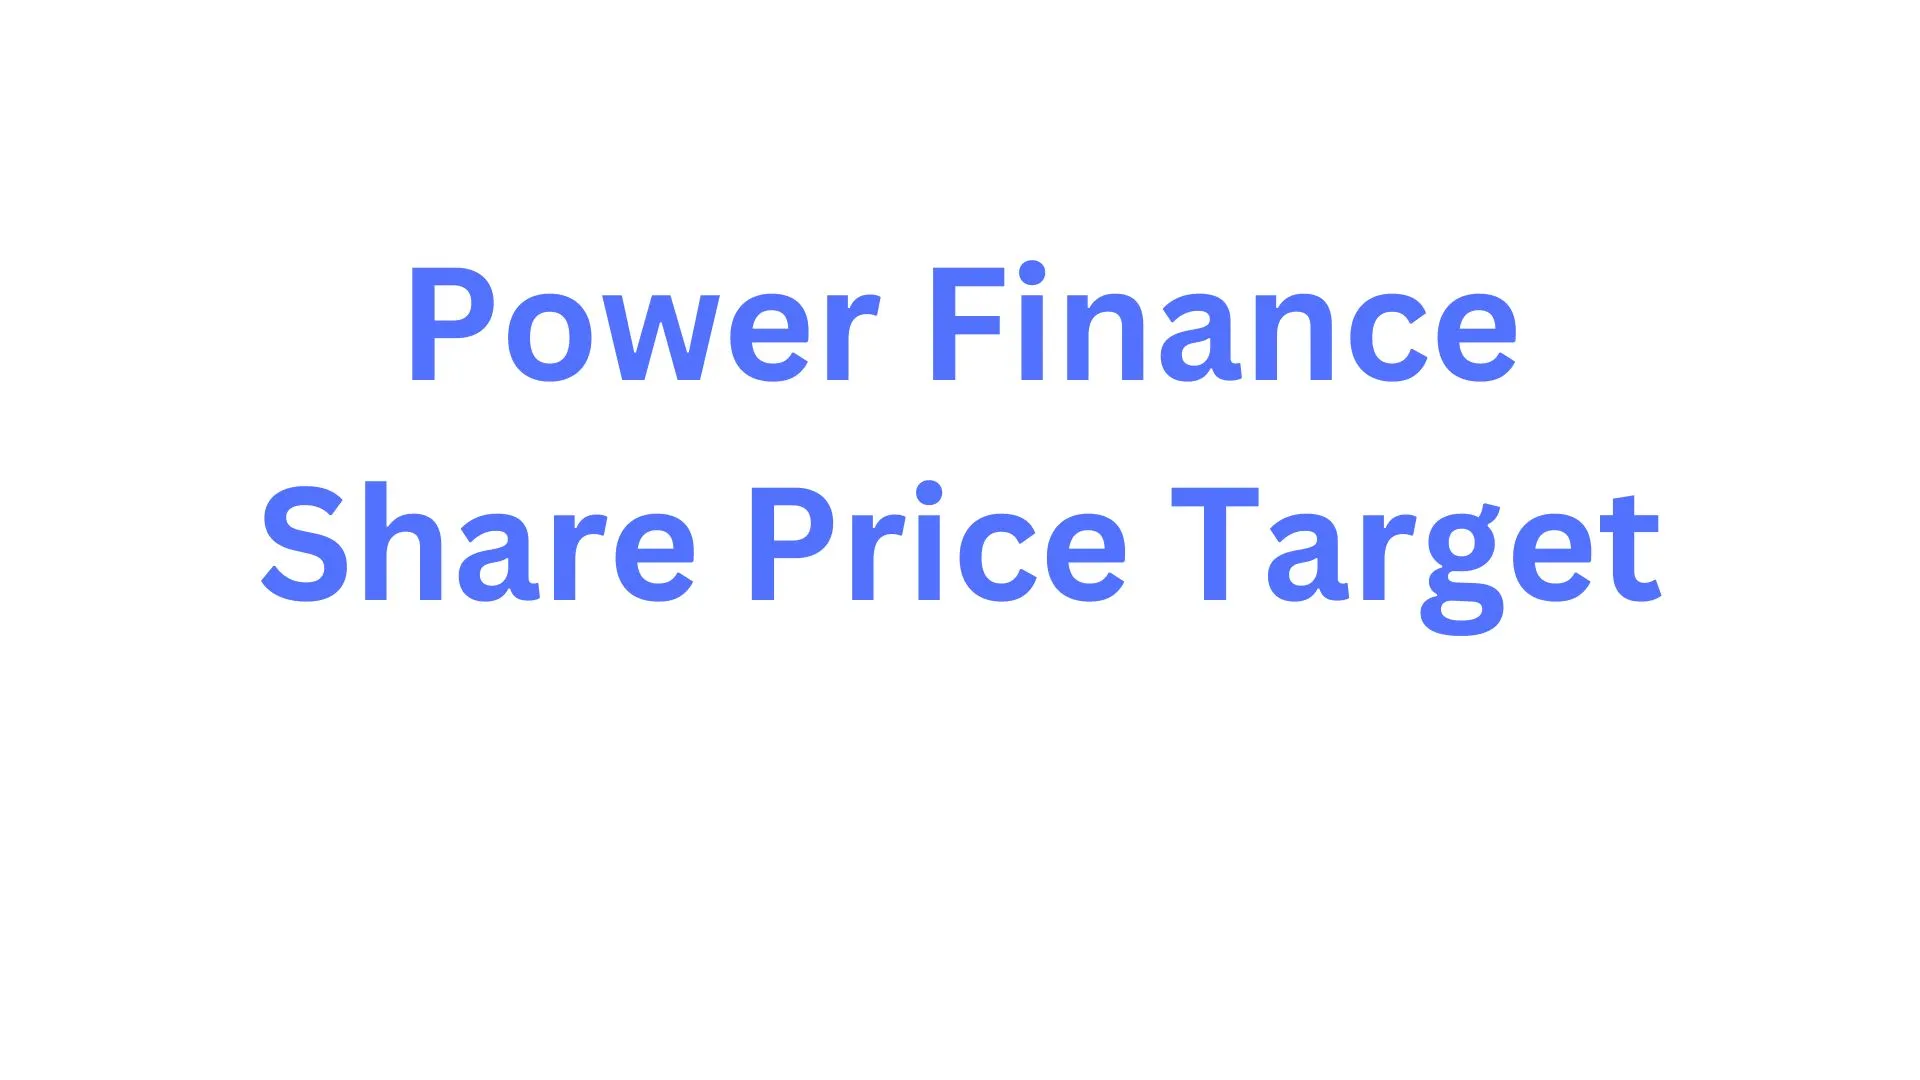 Power Finance Share Price Target